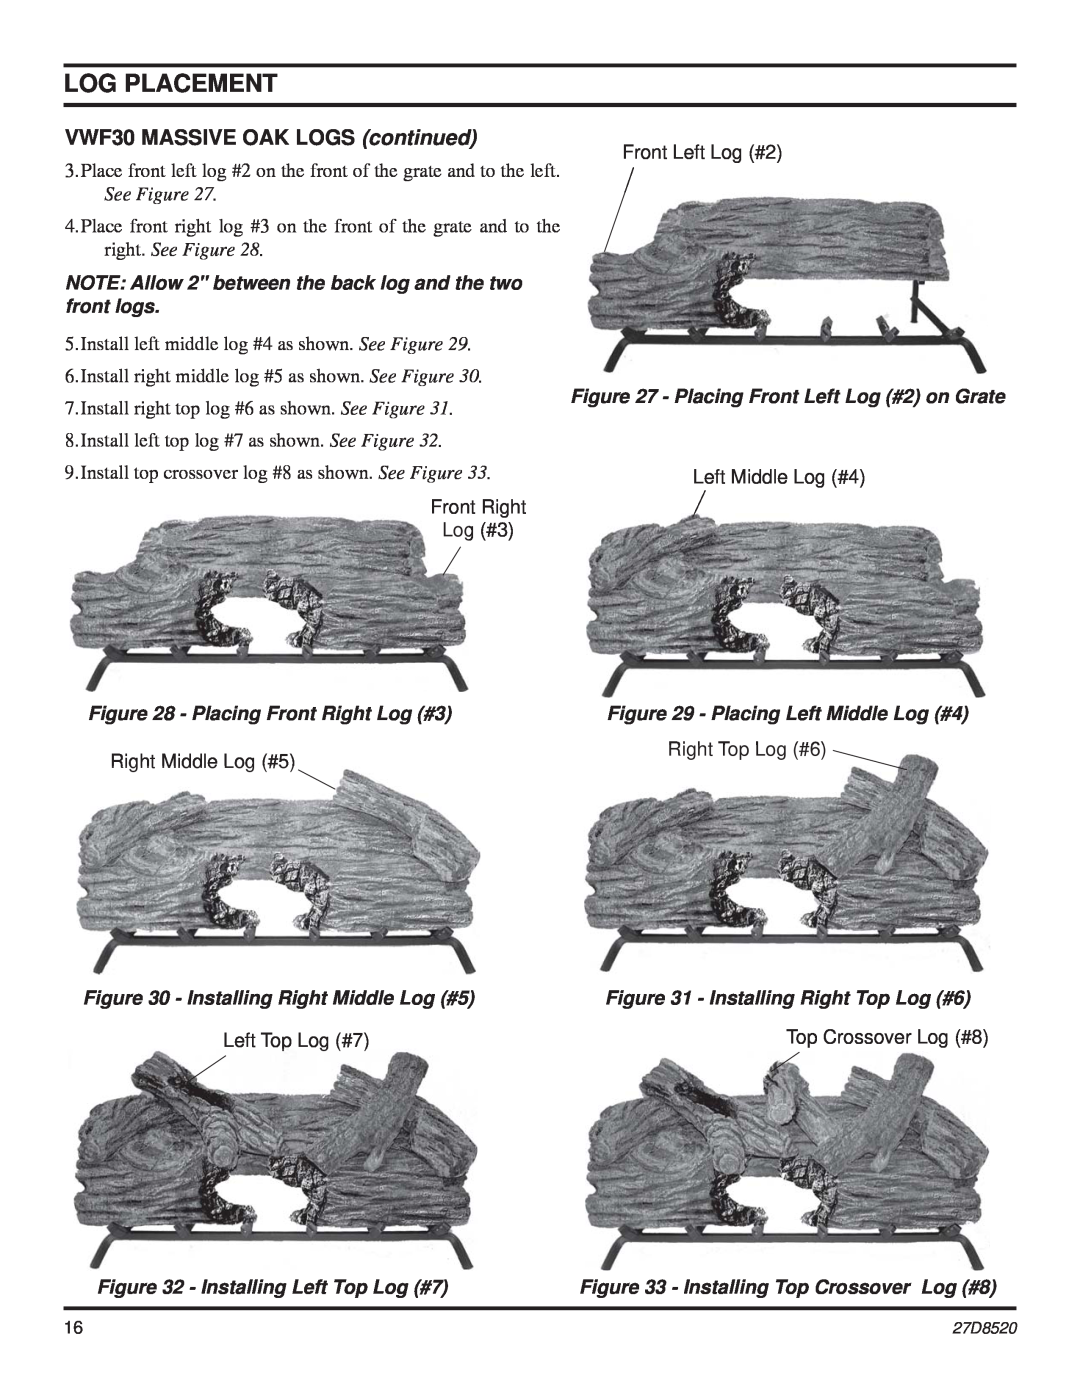 Monessen Hearth VWF30 MASSIVE OAK LOGS continued, Log Placement, Front Left Log #2, Front Right Log #3, Left Top Log #7 